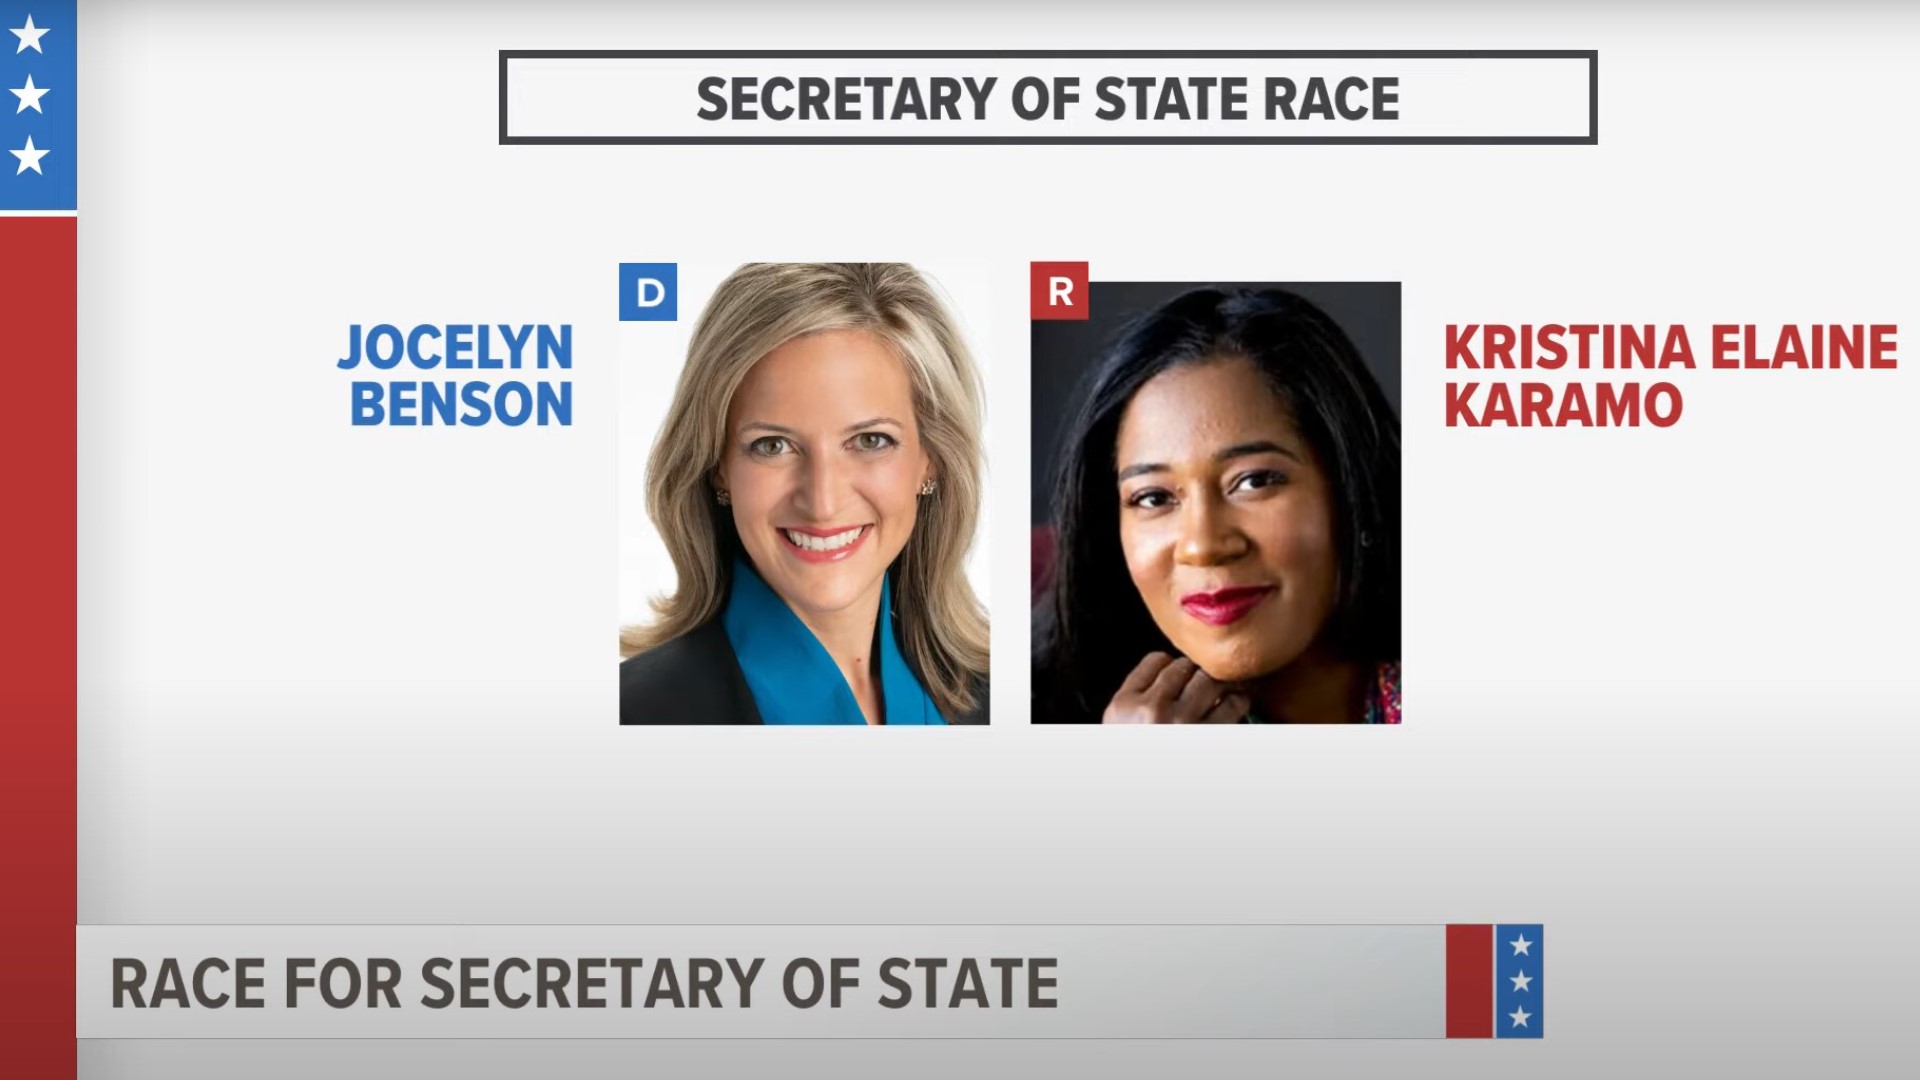 Trump-endorsed Republican challenger Kristina Karamo is taking on Democratic incumbent Jocelyn Benson in Michigan's Secretary of State race.